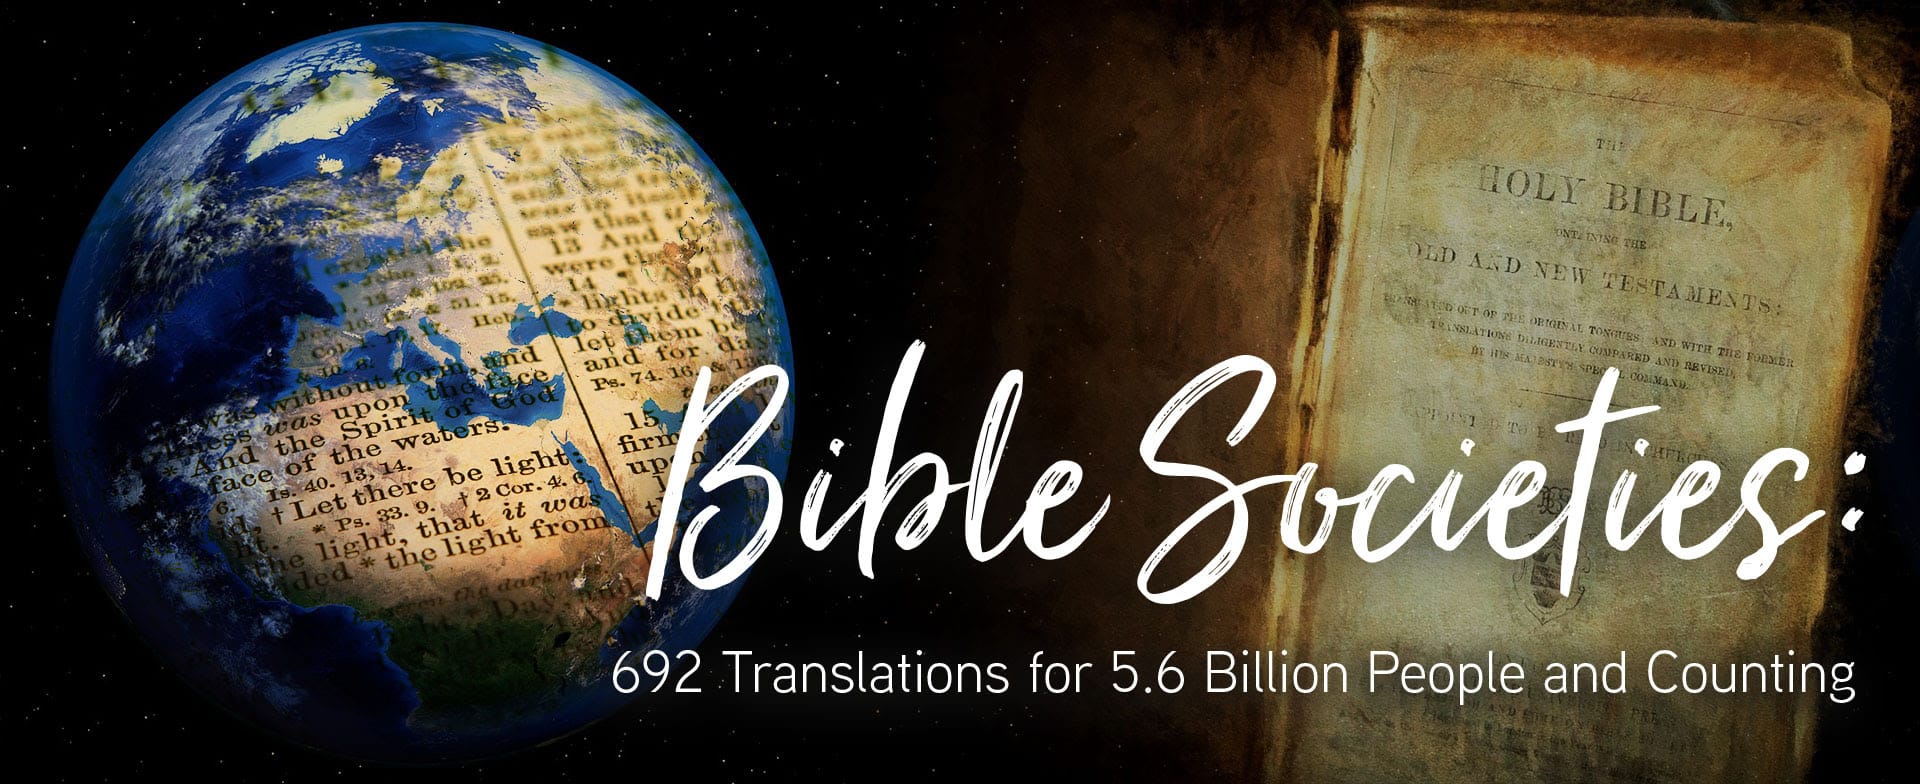 Bible translation